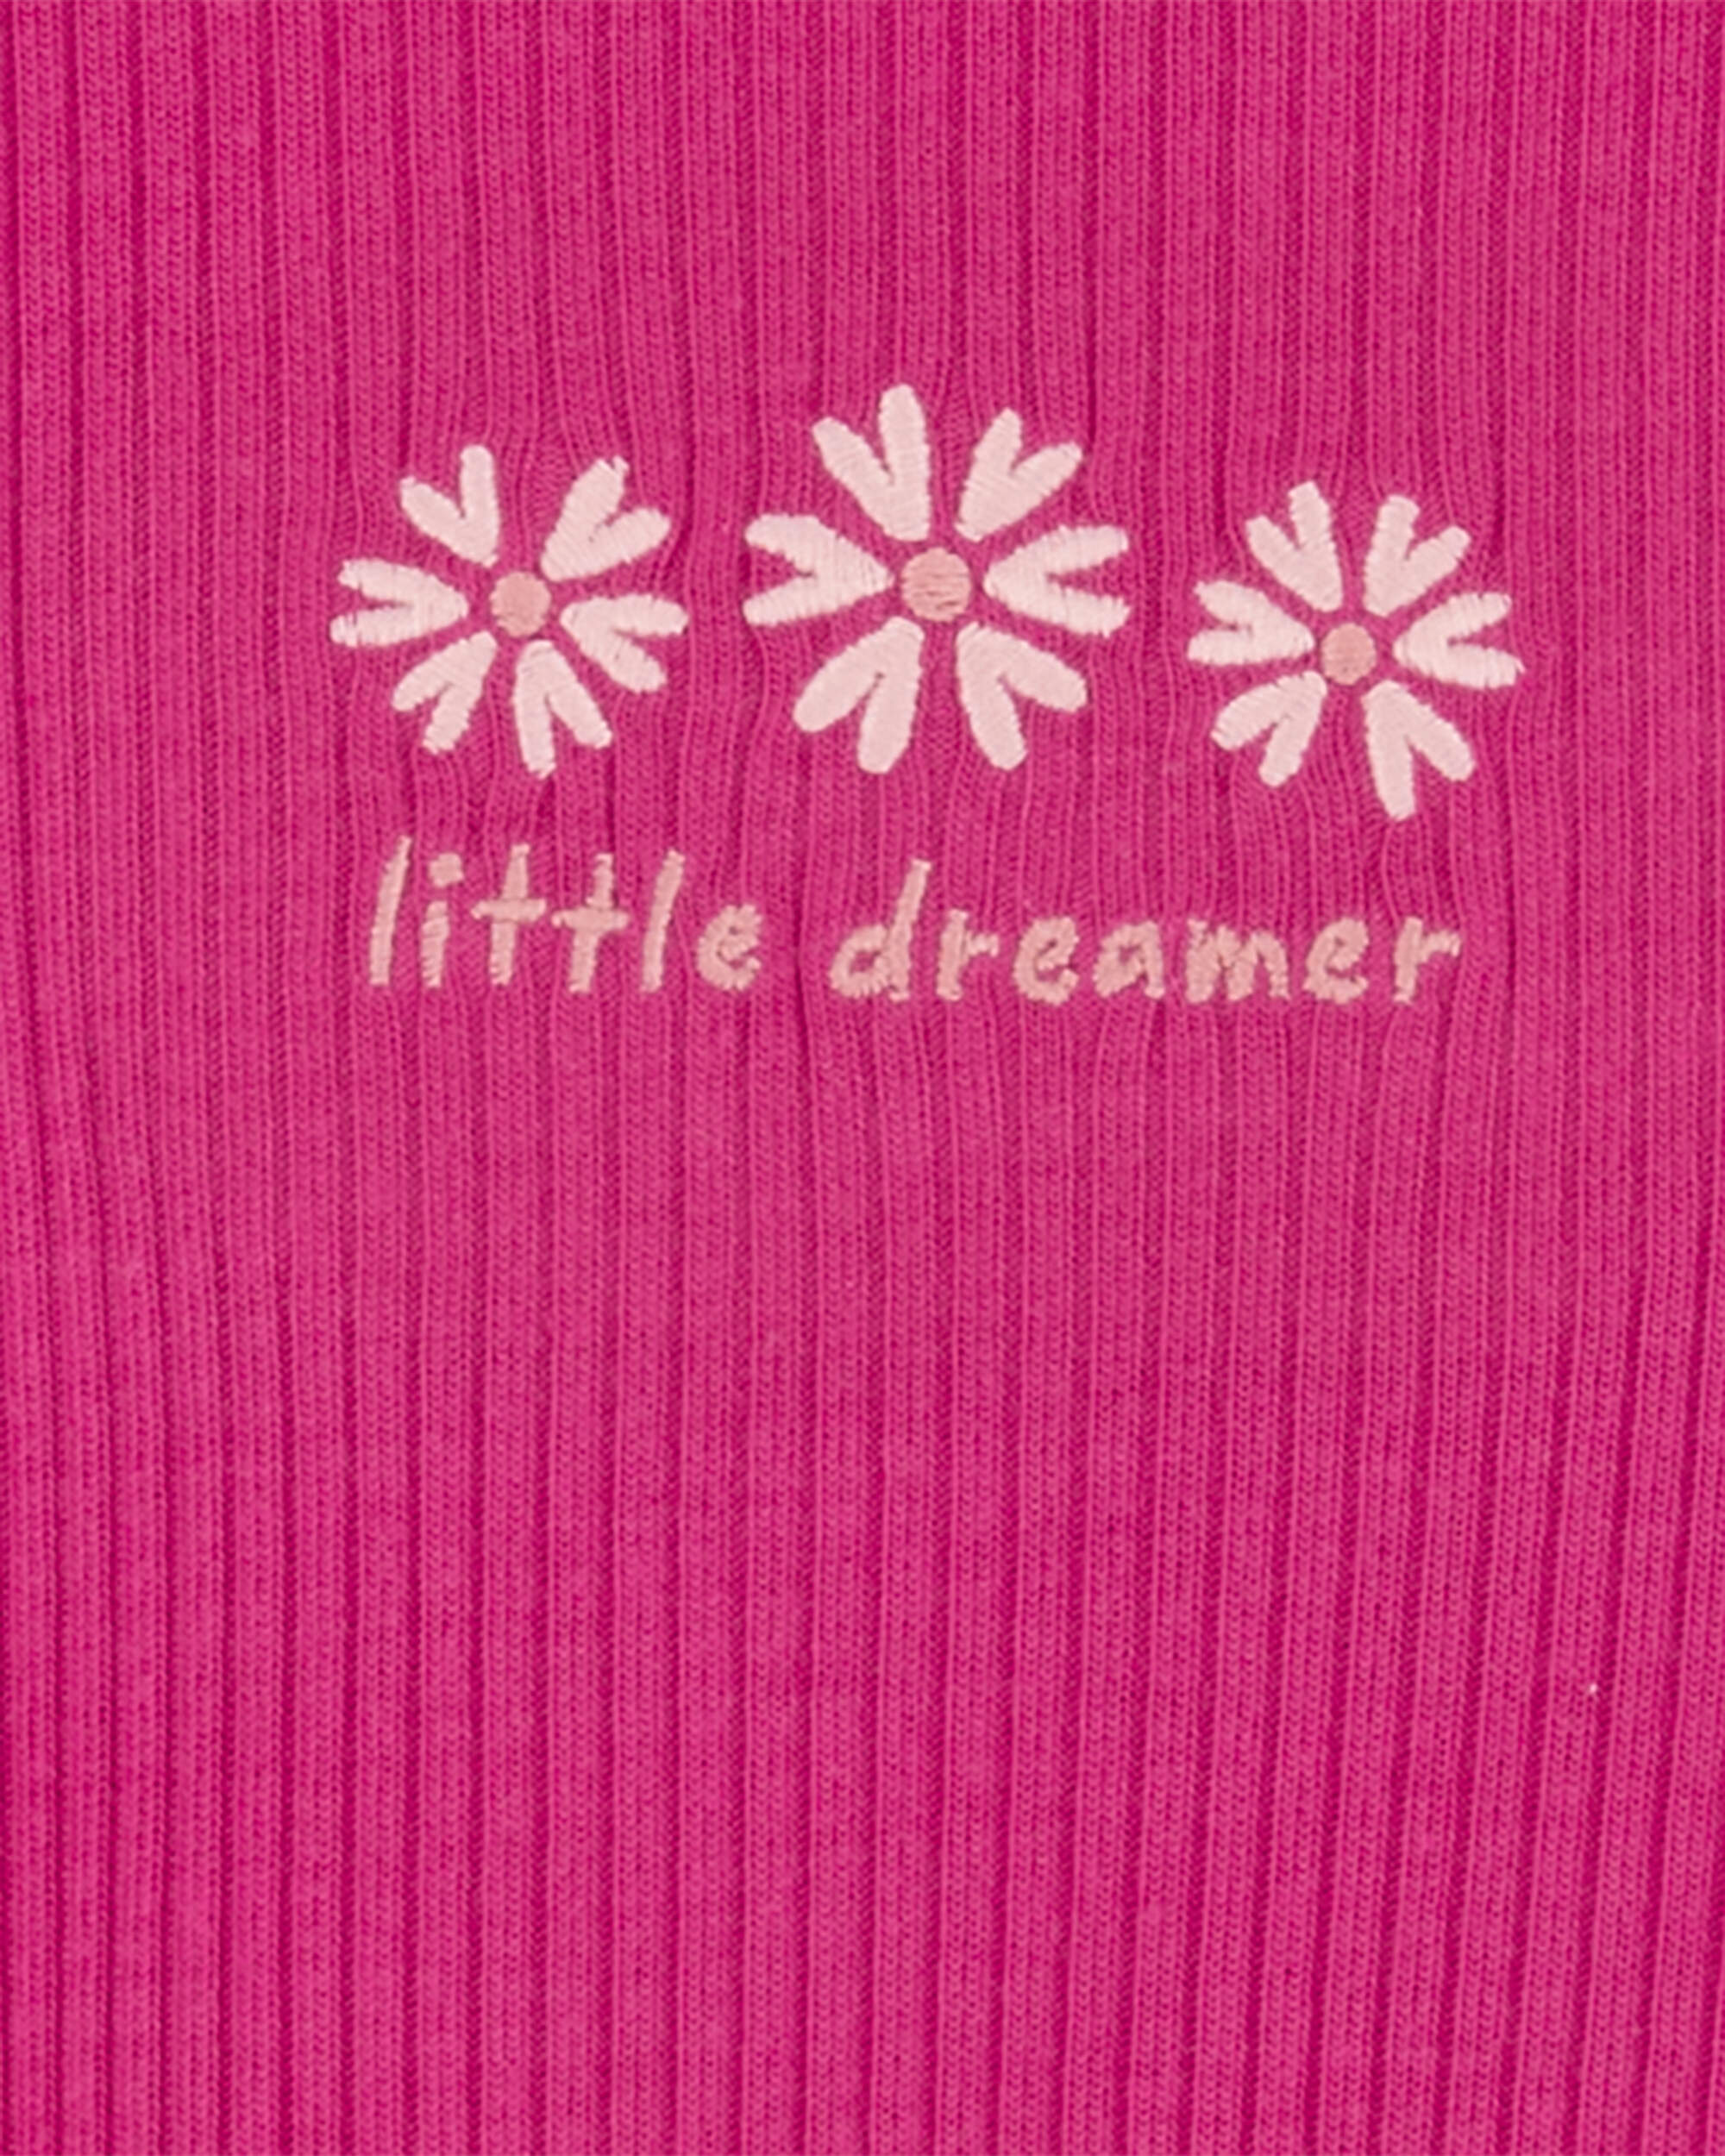 Toddler 2-Piece Little Dreamer Loose Fit Pyjama Set